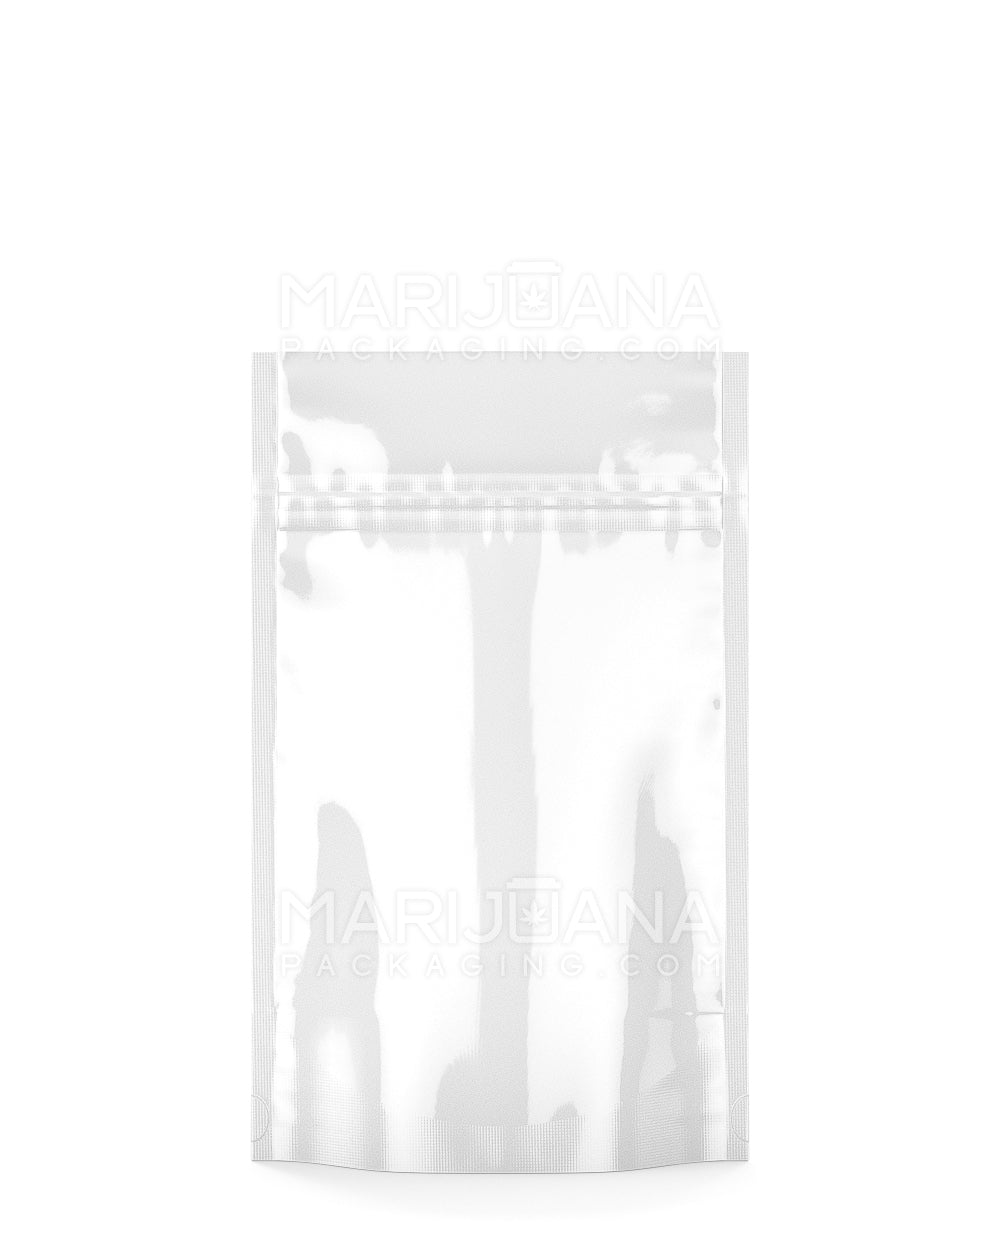 Tamper Evident | Glossy White Mylar Bag | 4in x 6.5in - 7g - 1000 Count - 1